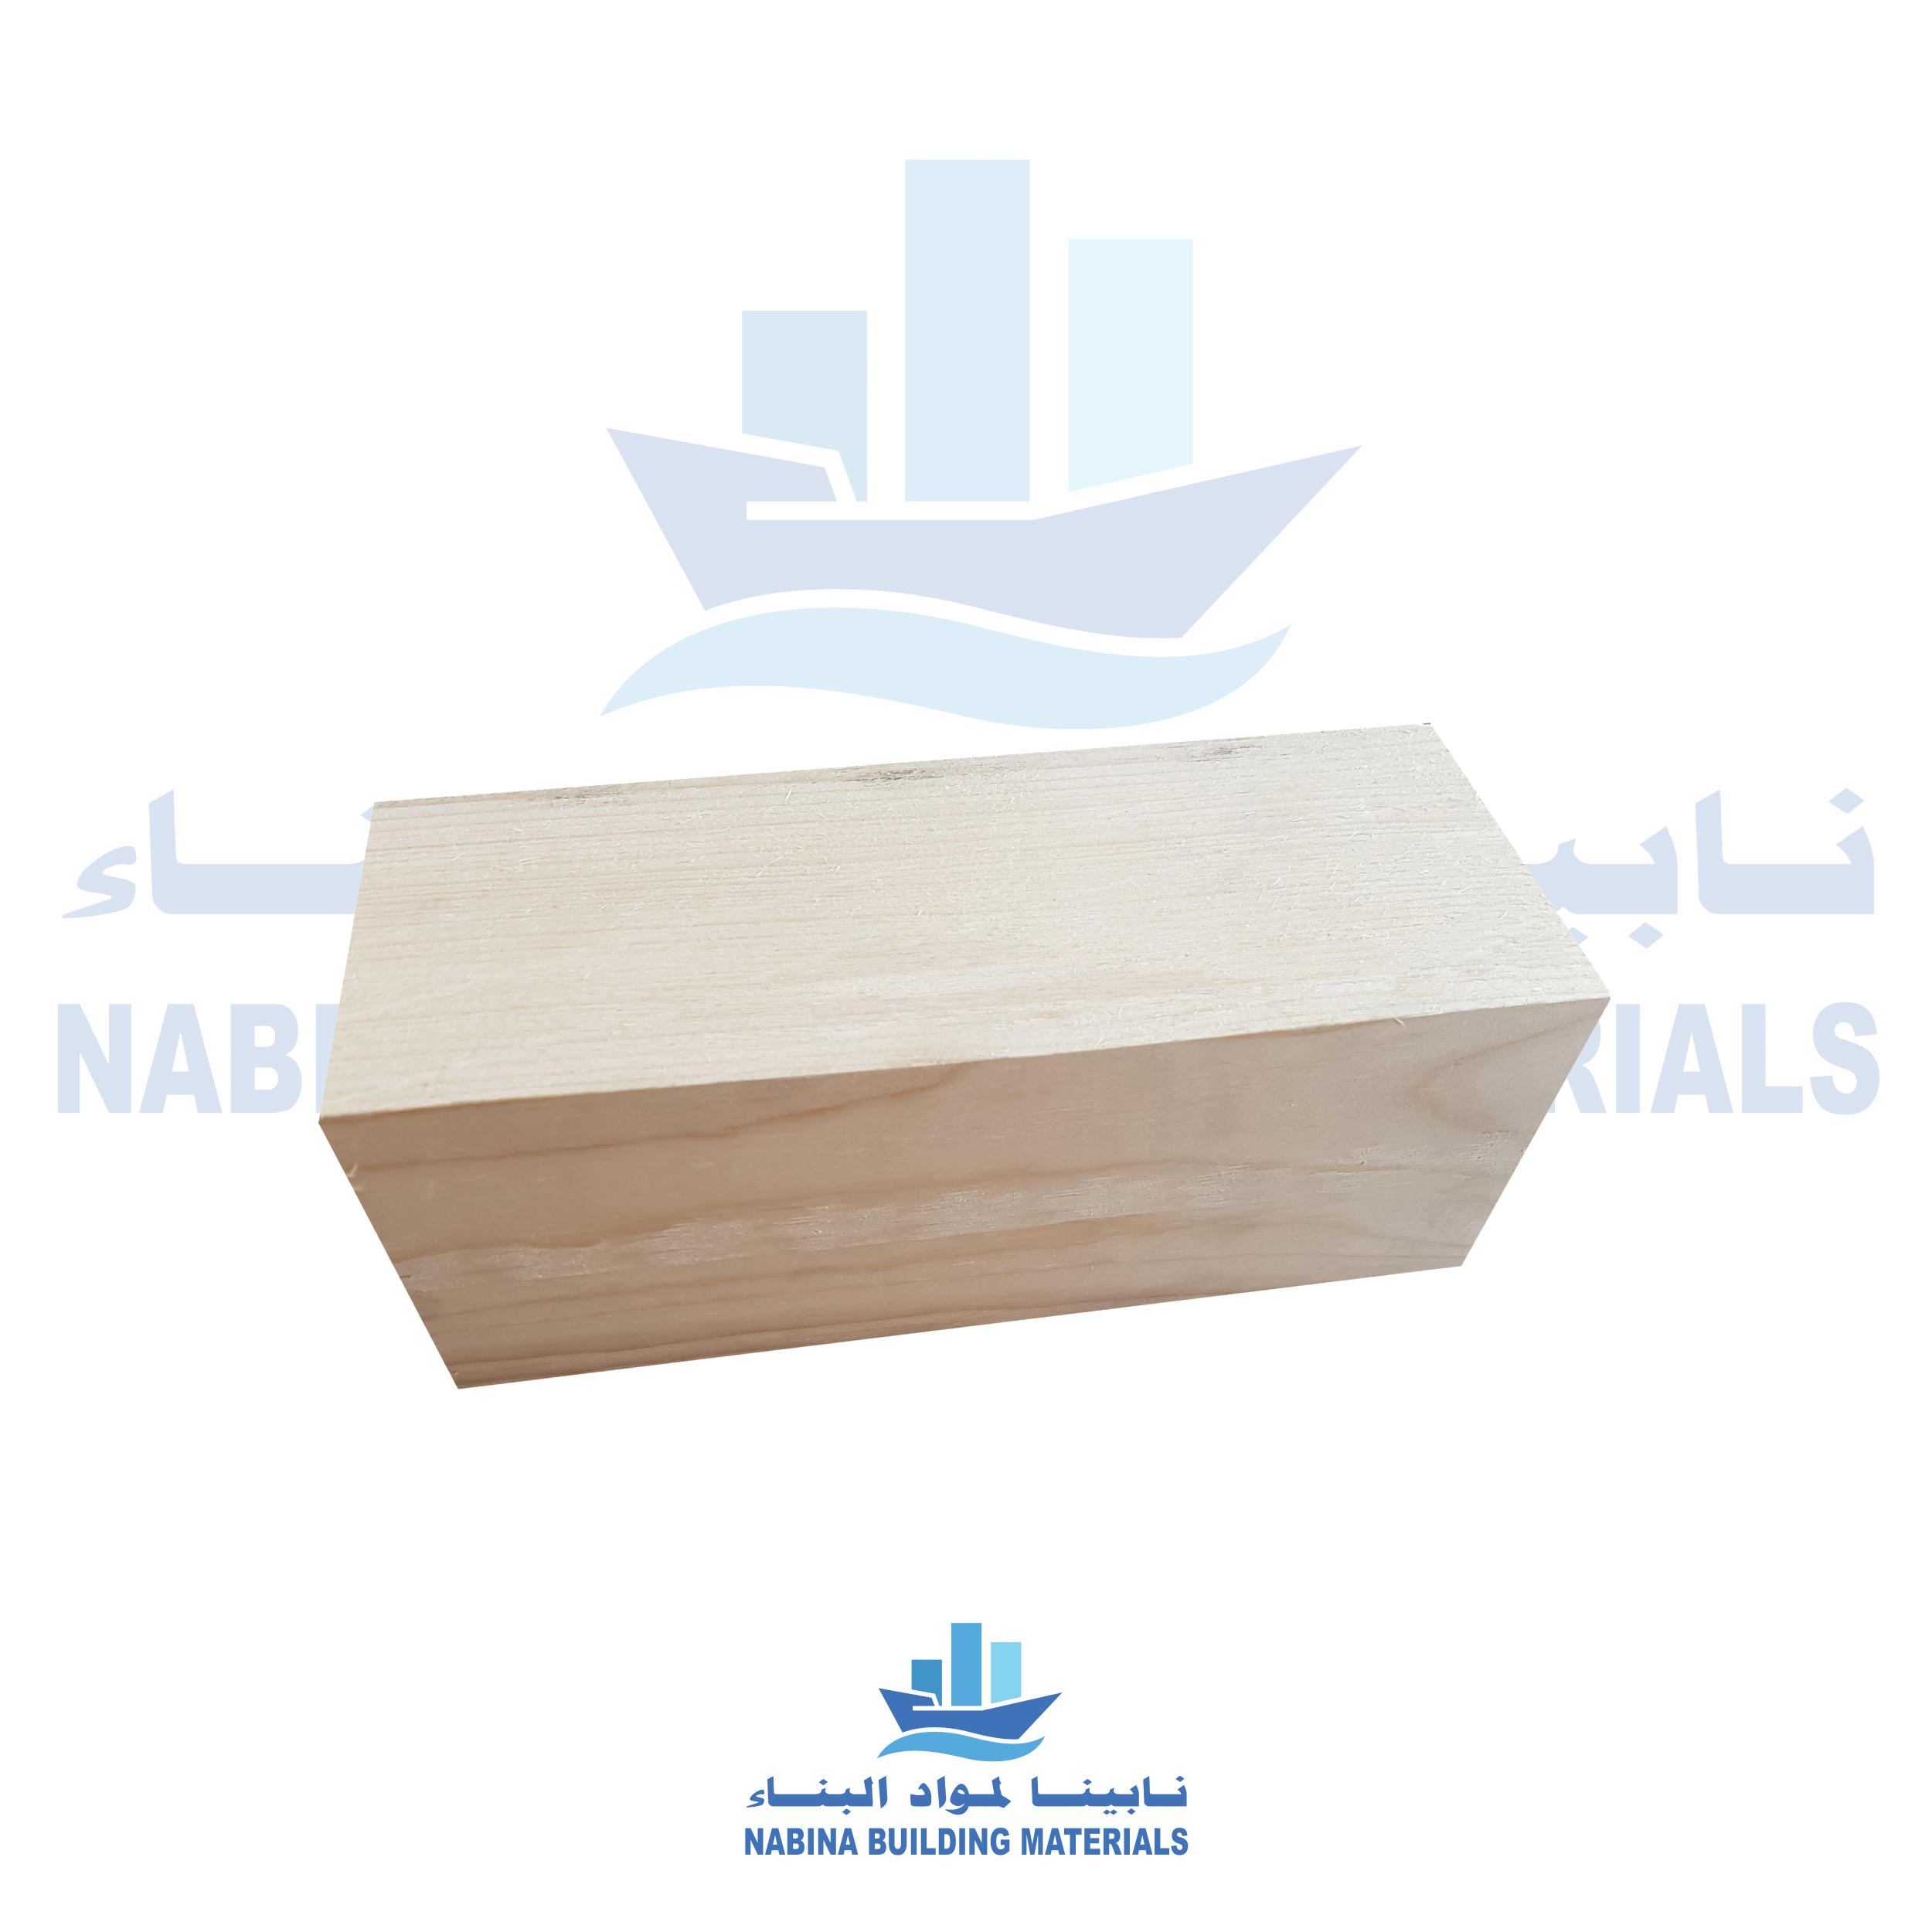 Nabina-Building-Materials-whitewood